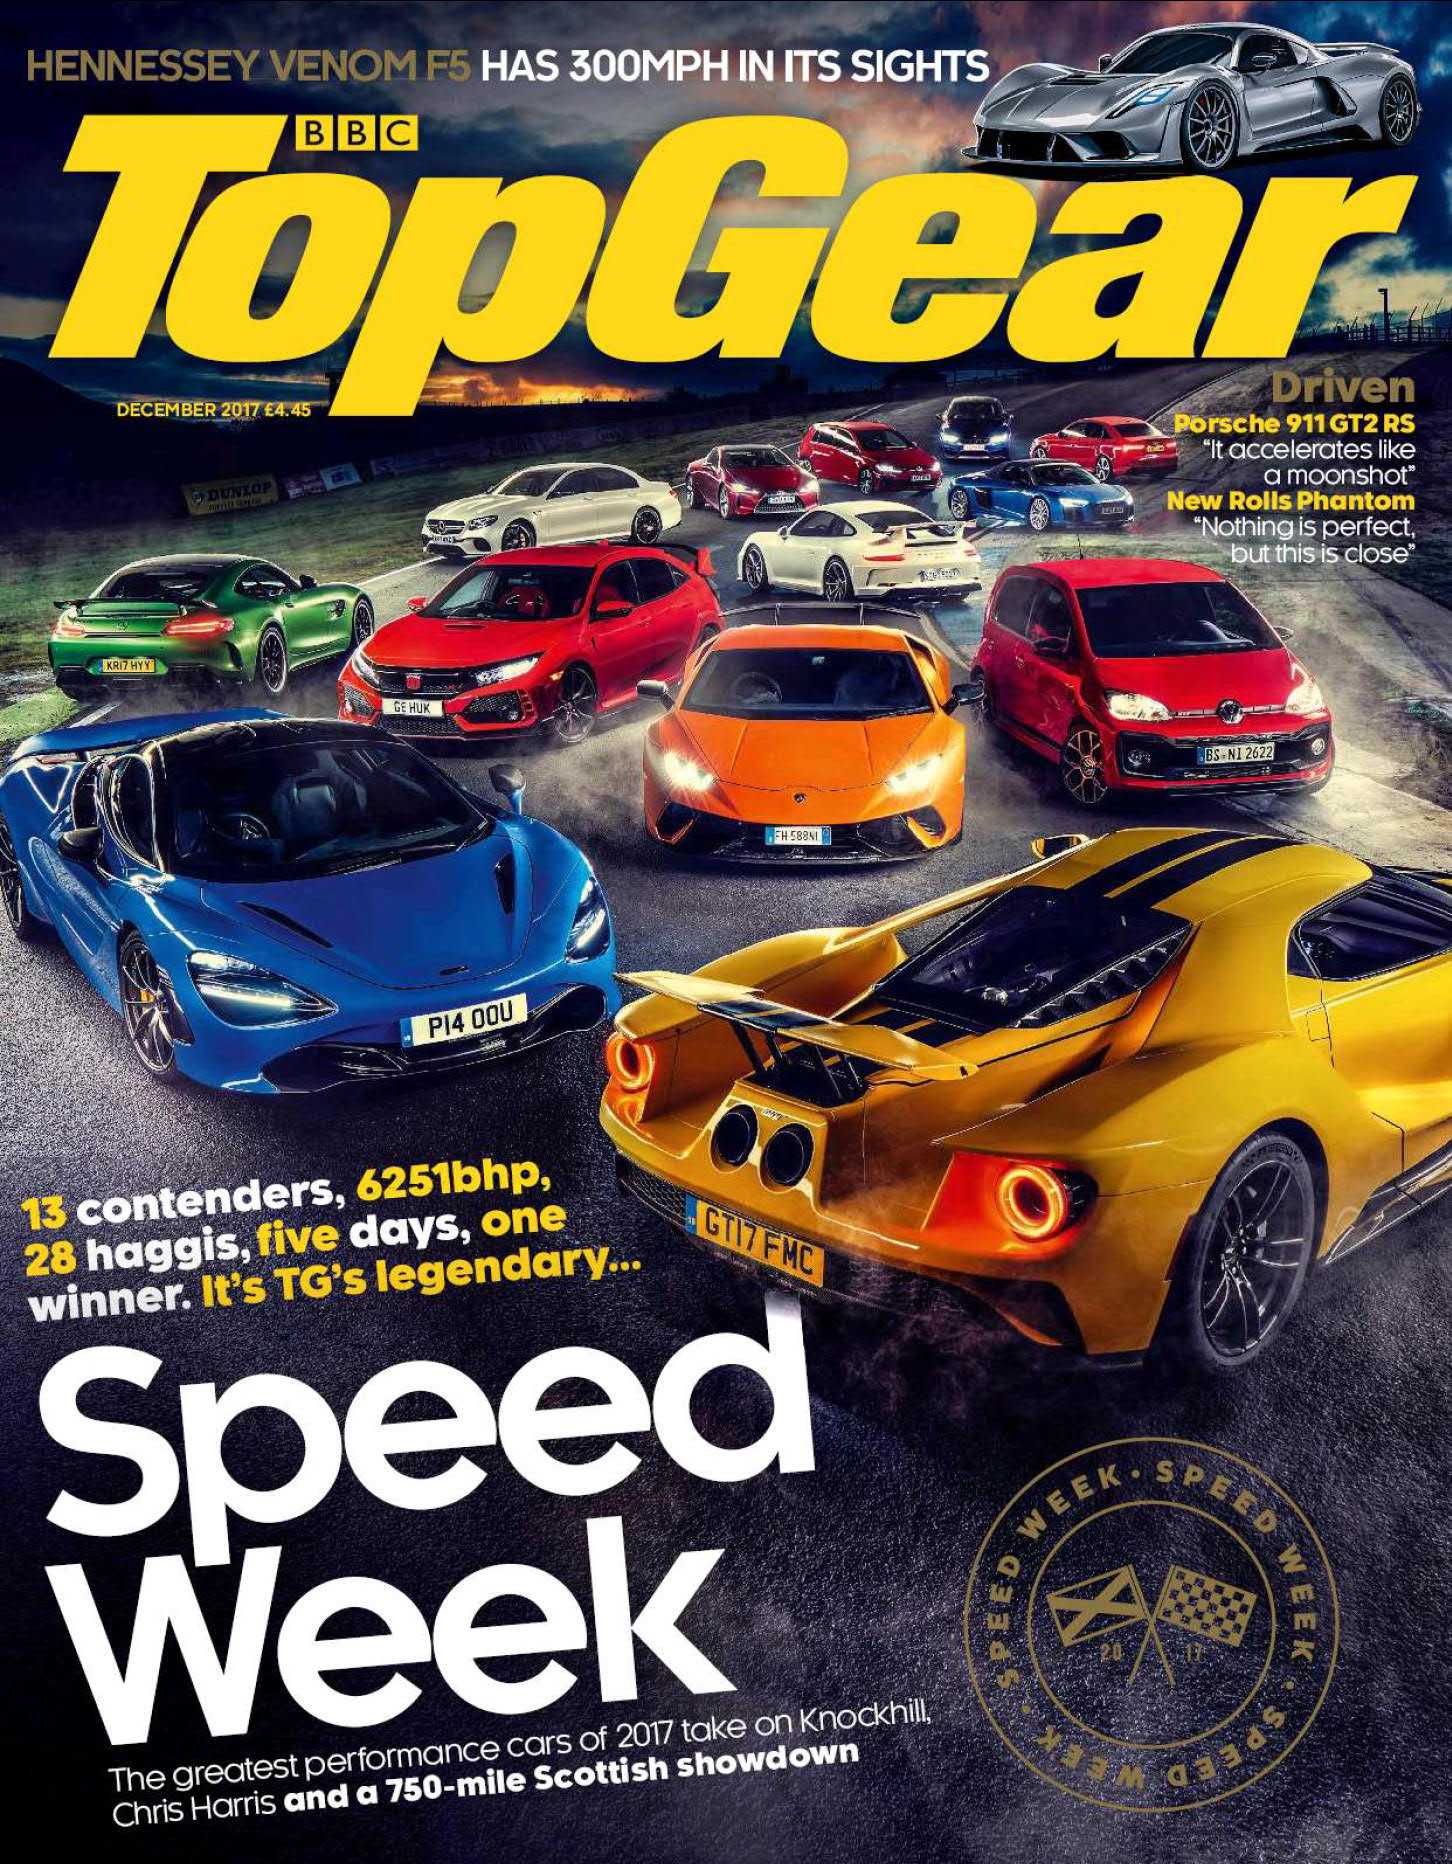 BBC Top Gear BBC疯狂汽车秀杂志 DECEMBER 2017年12月刊